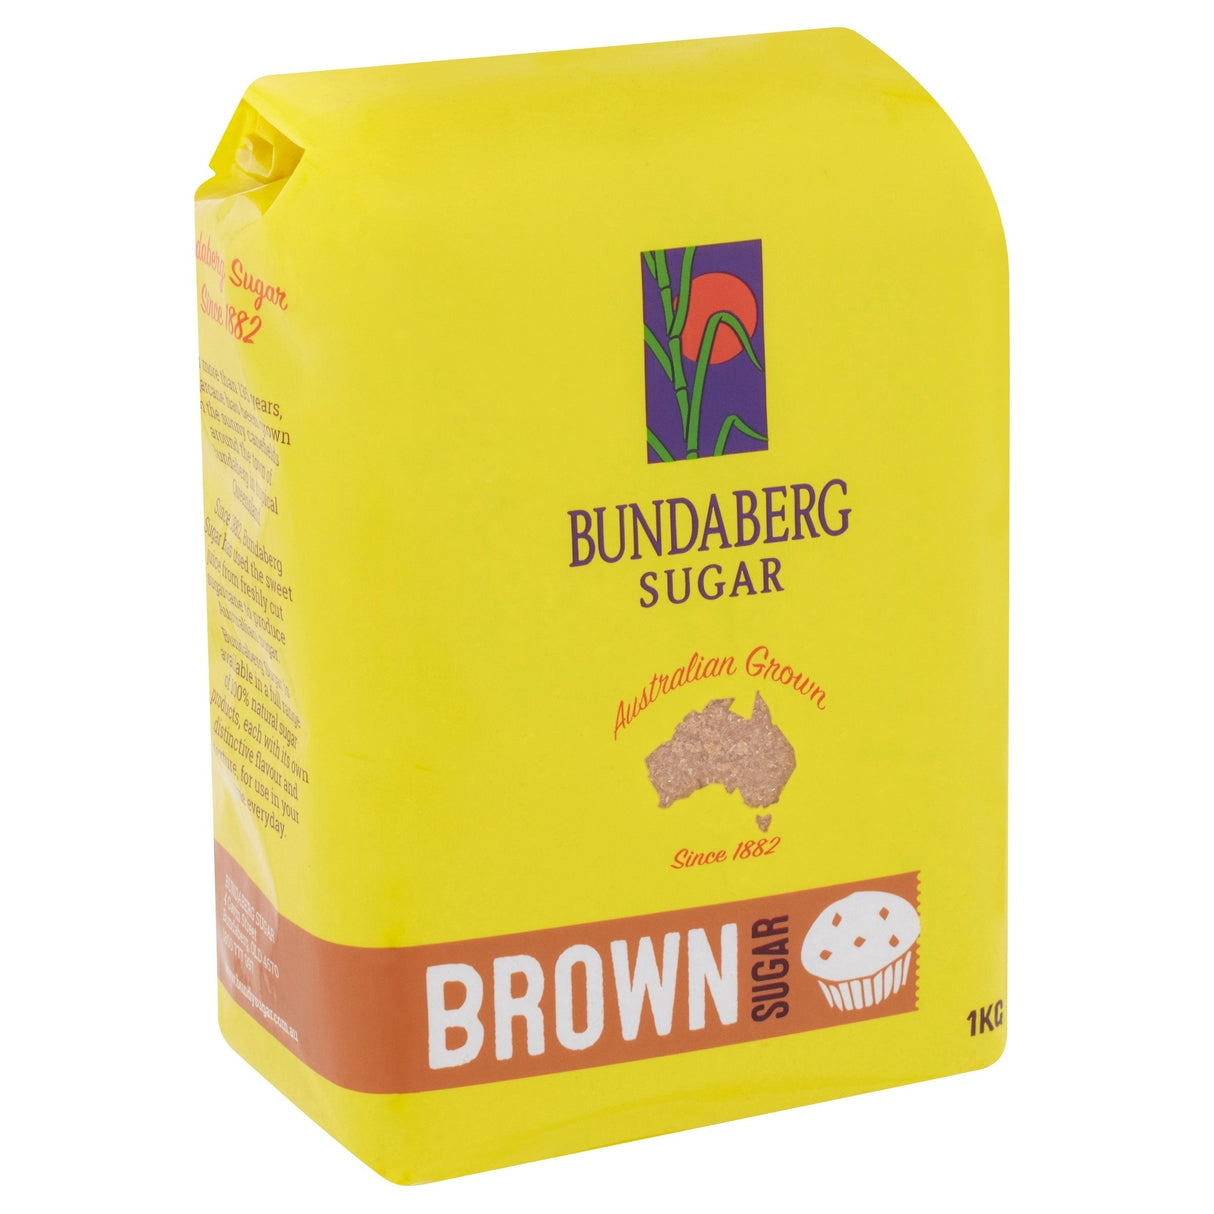 Bundaberg Sugar Brown Sugar 1kg